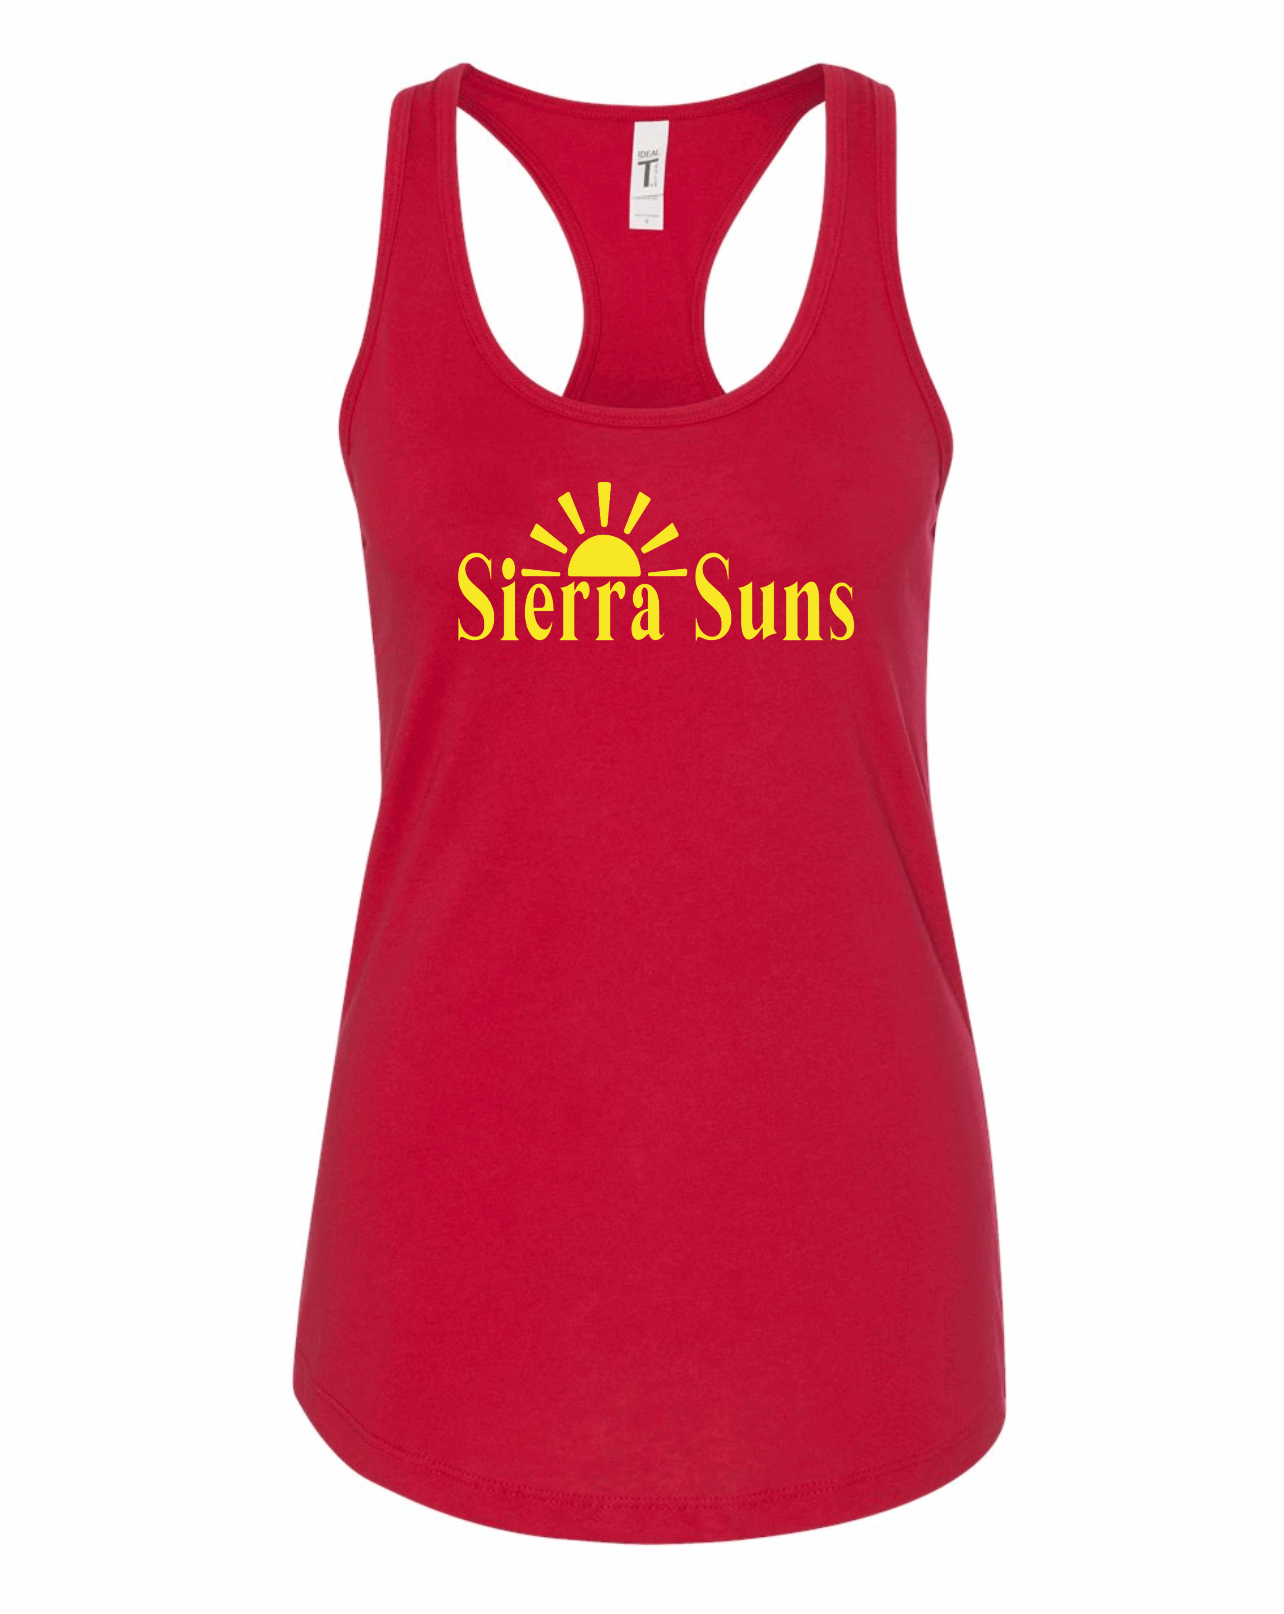 Sierra Suns Tank Top